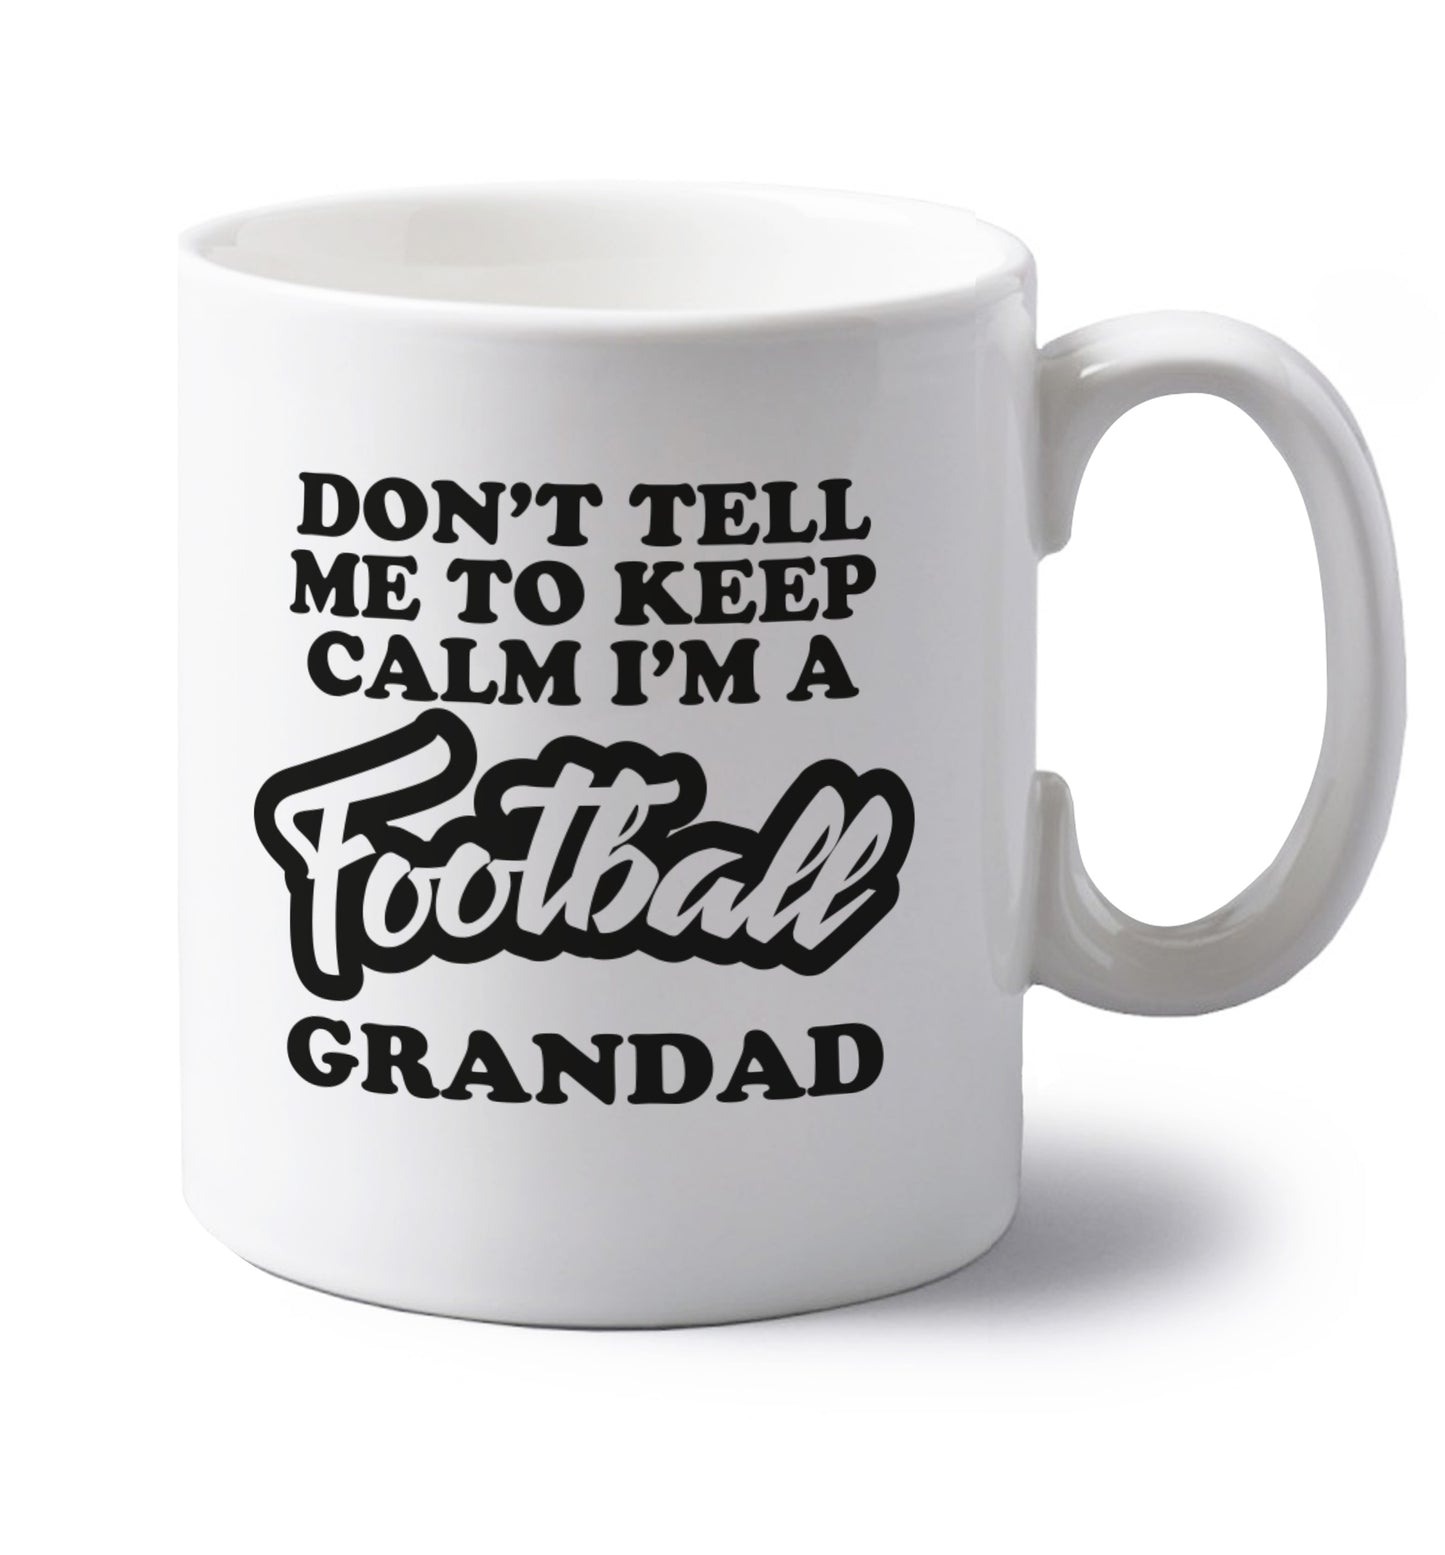 Don't tell me to keep calm I'm a football grandad left handed white ceramic mug 